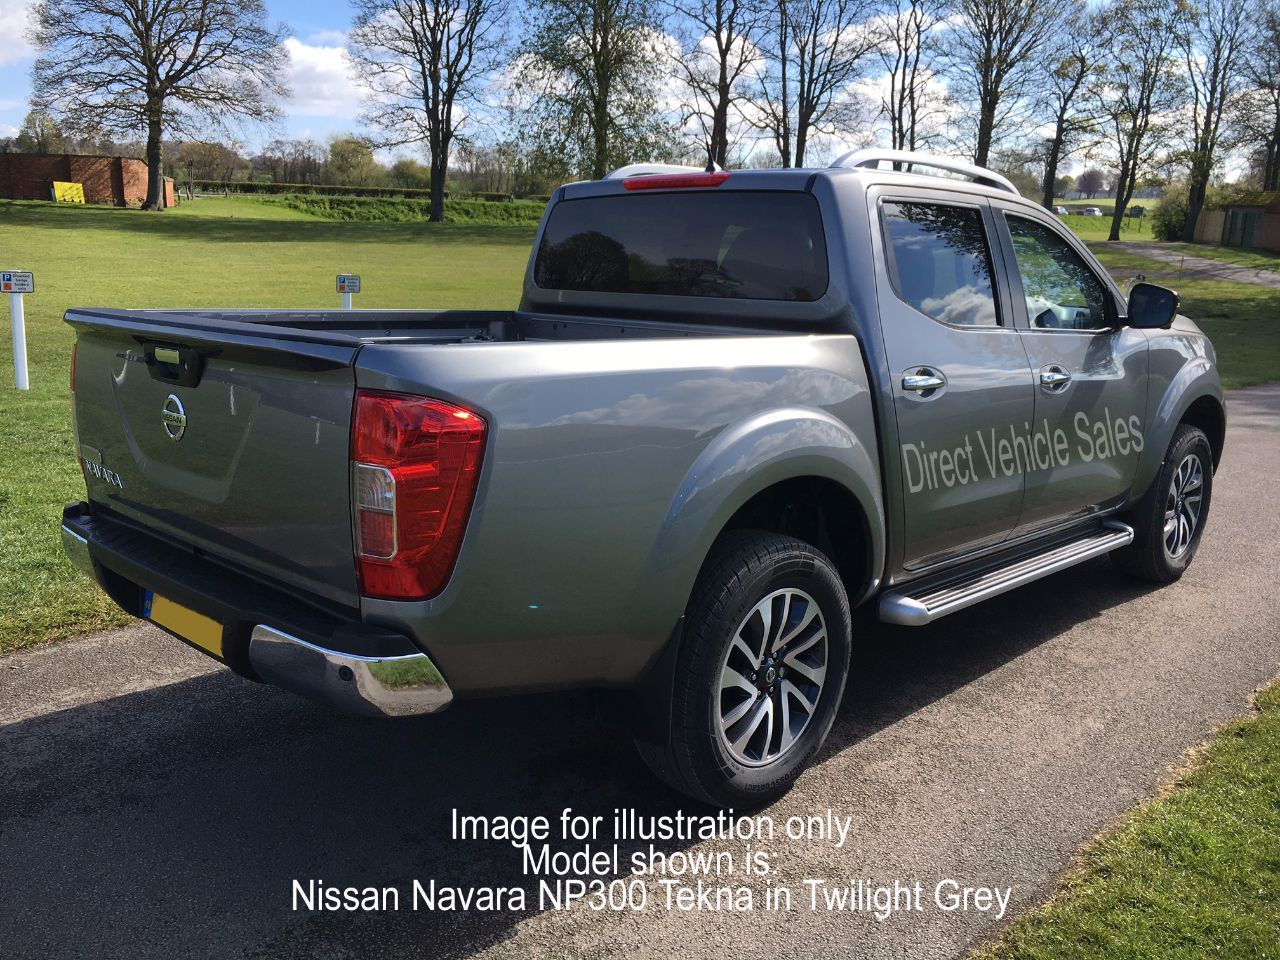 Nissan ripon north yorkshire #3